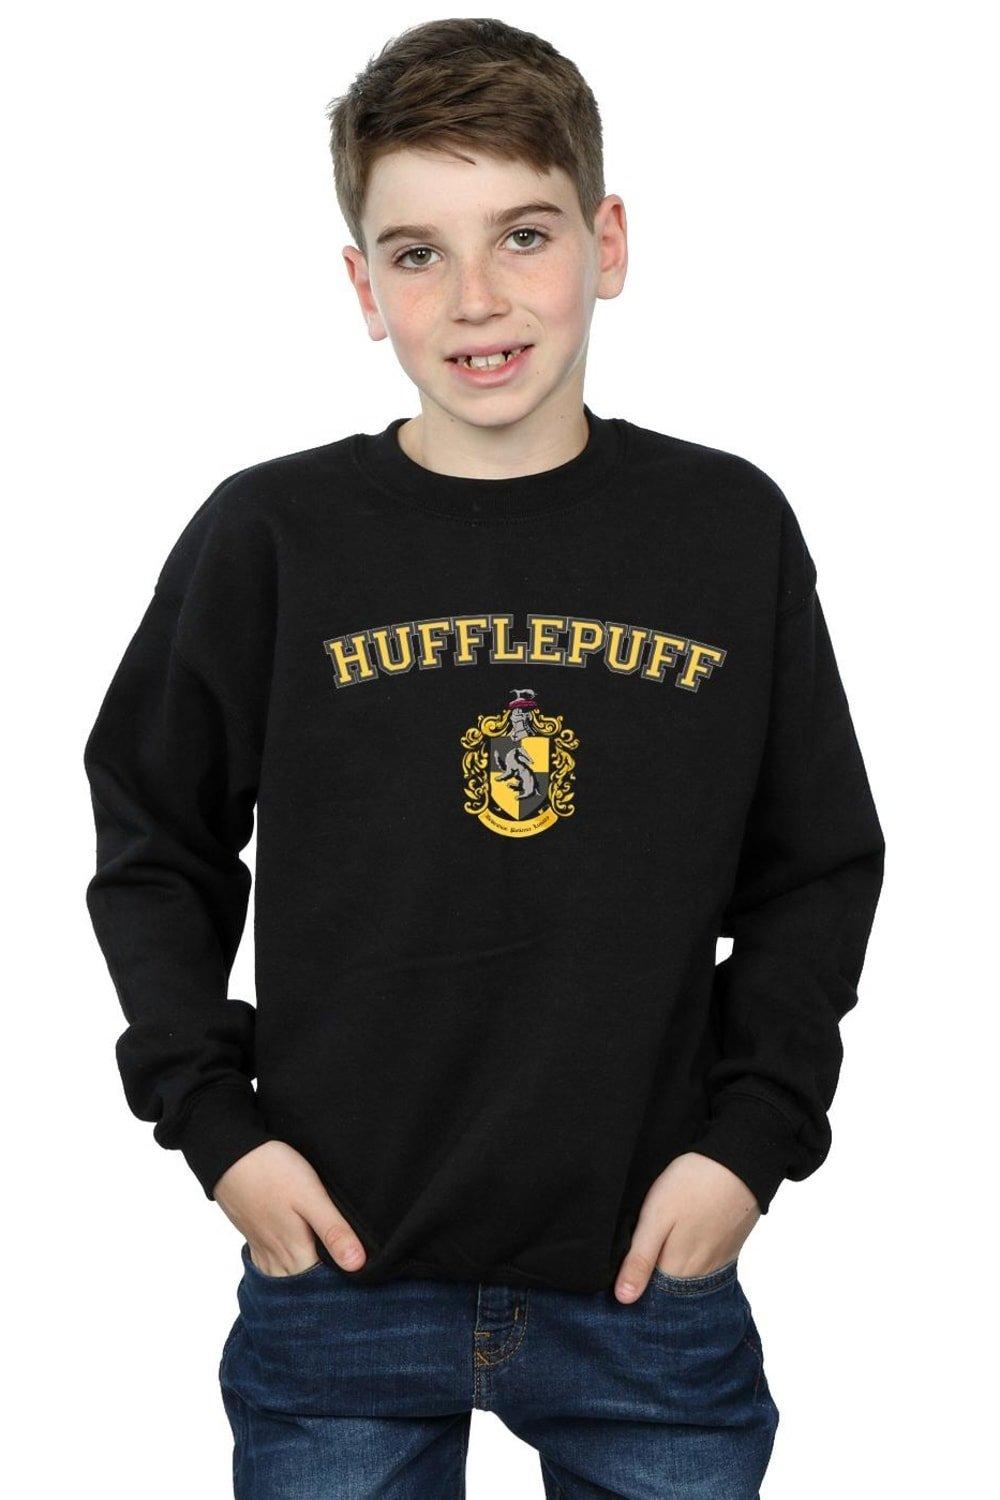 Hufflepuff Crest Sweatshirt